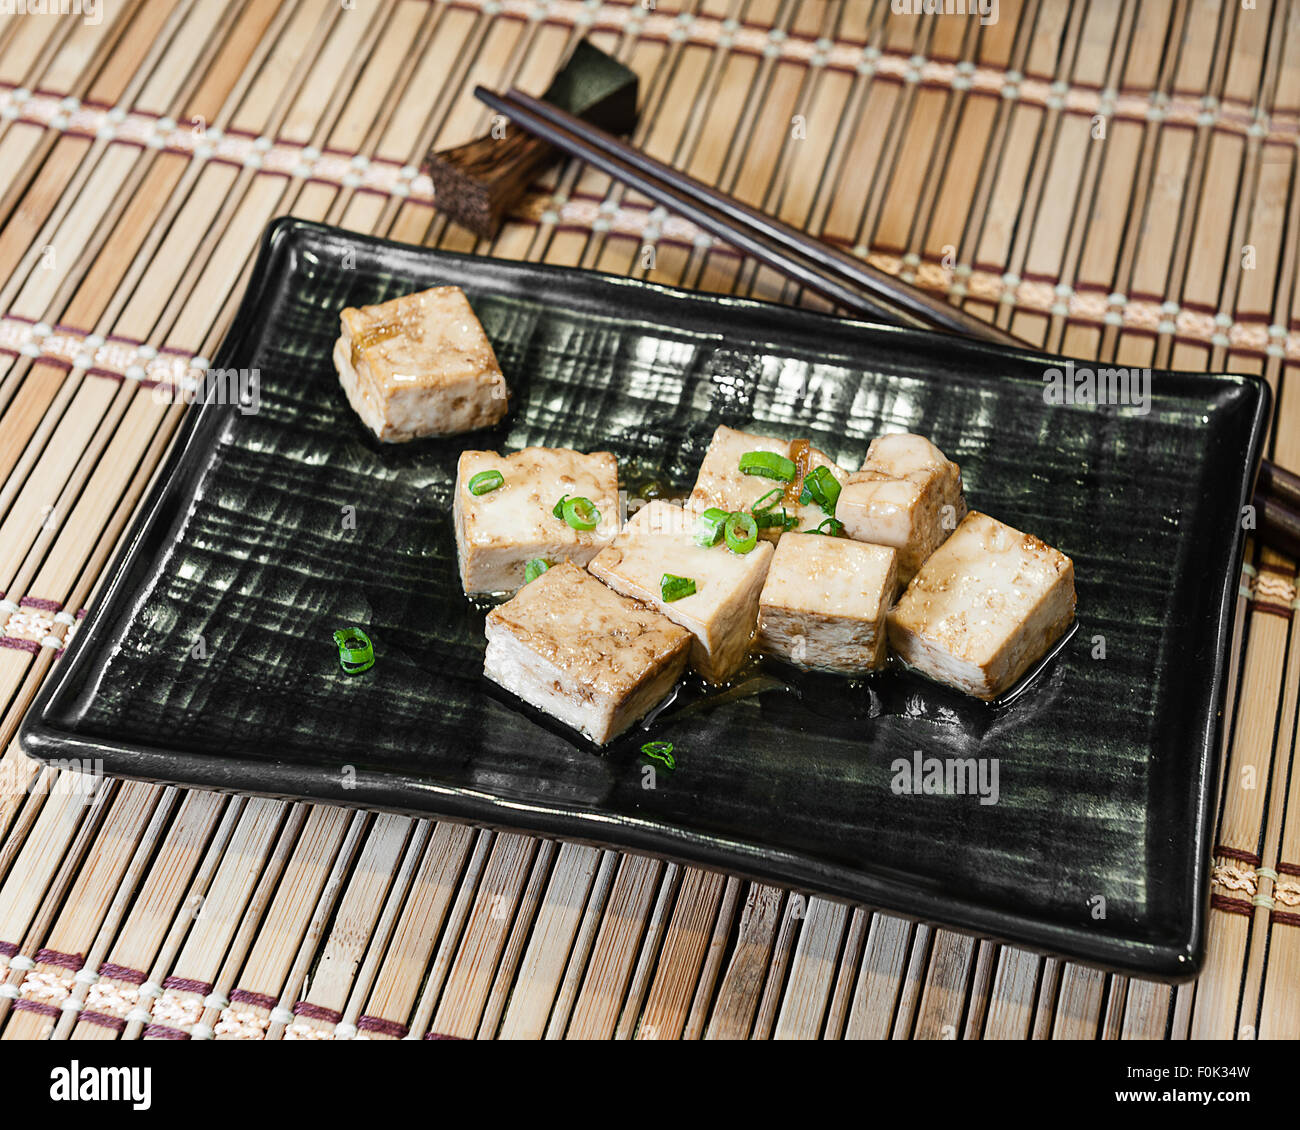 Asian cuisine: Tofu plate. Stock Photo